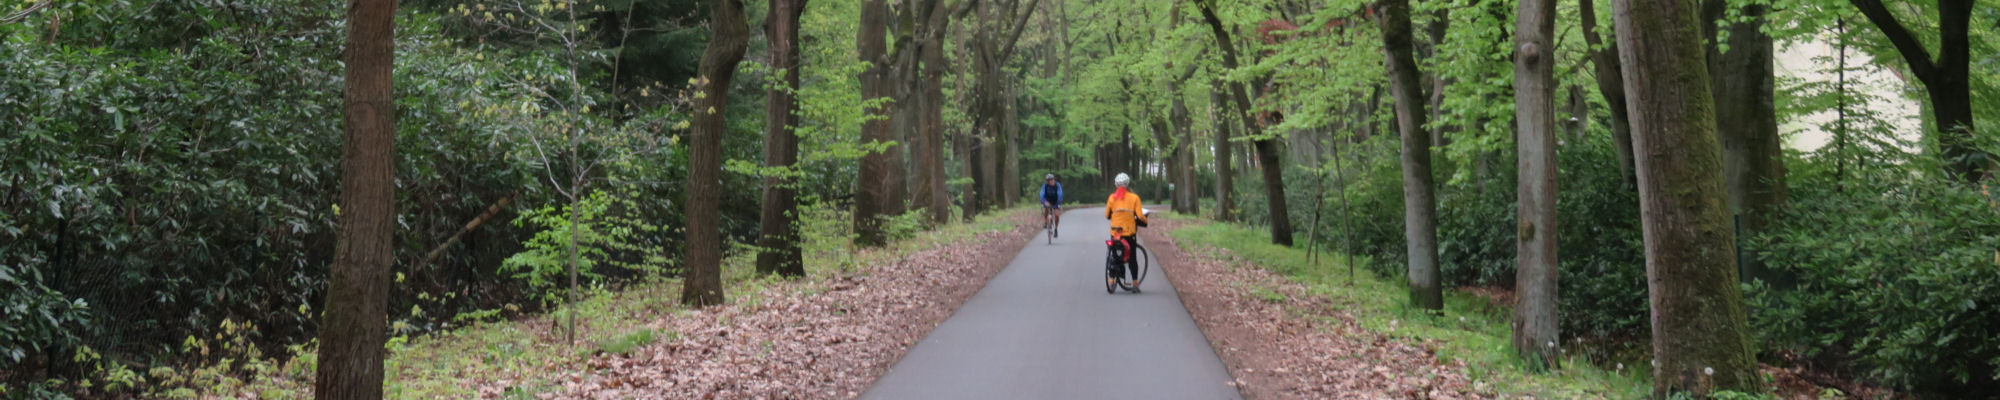 amsterdam cycling tour